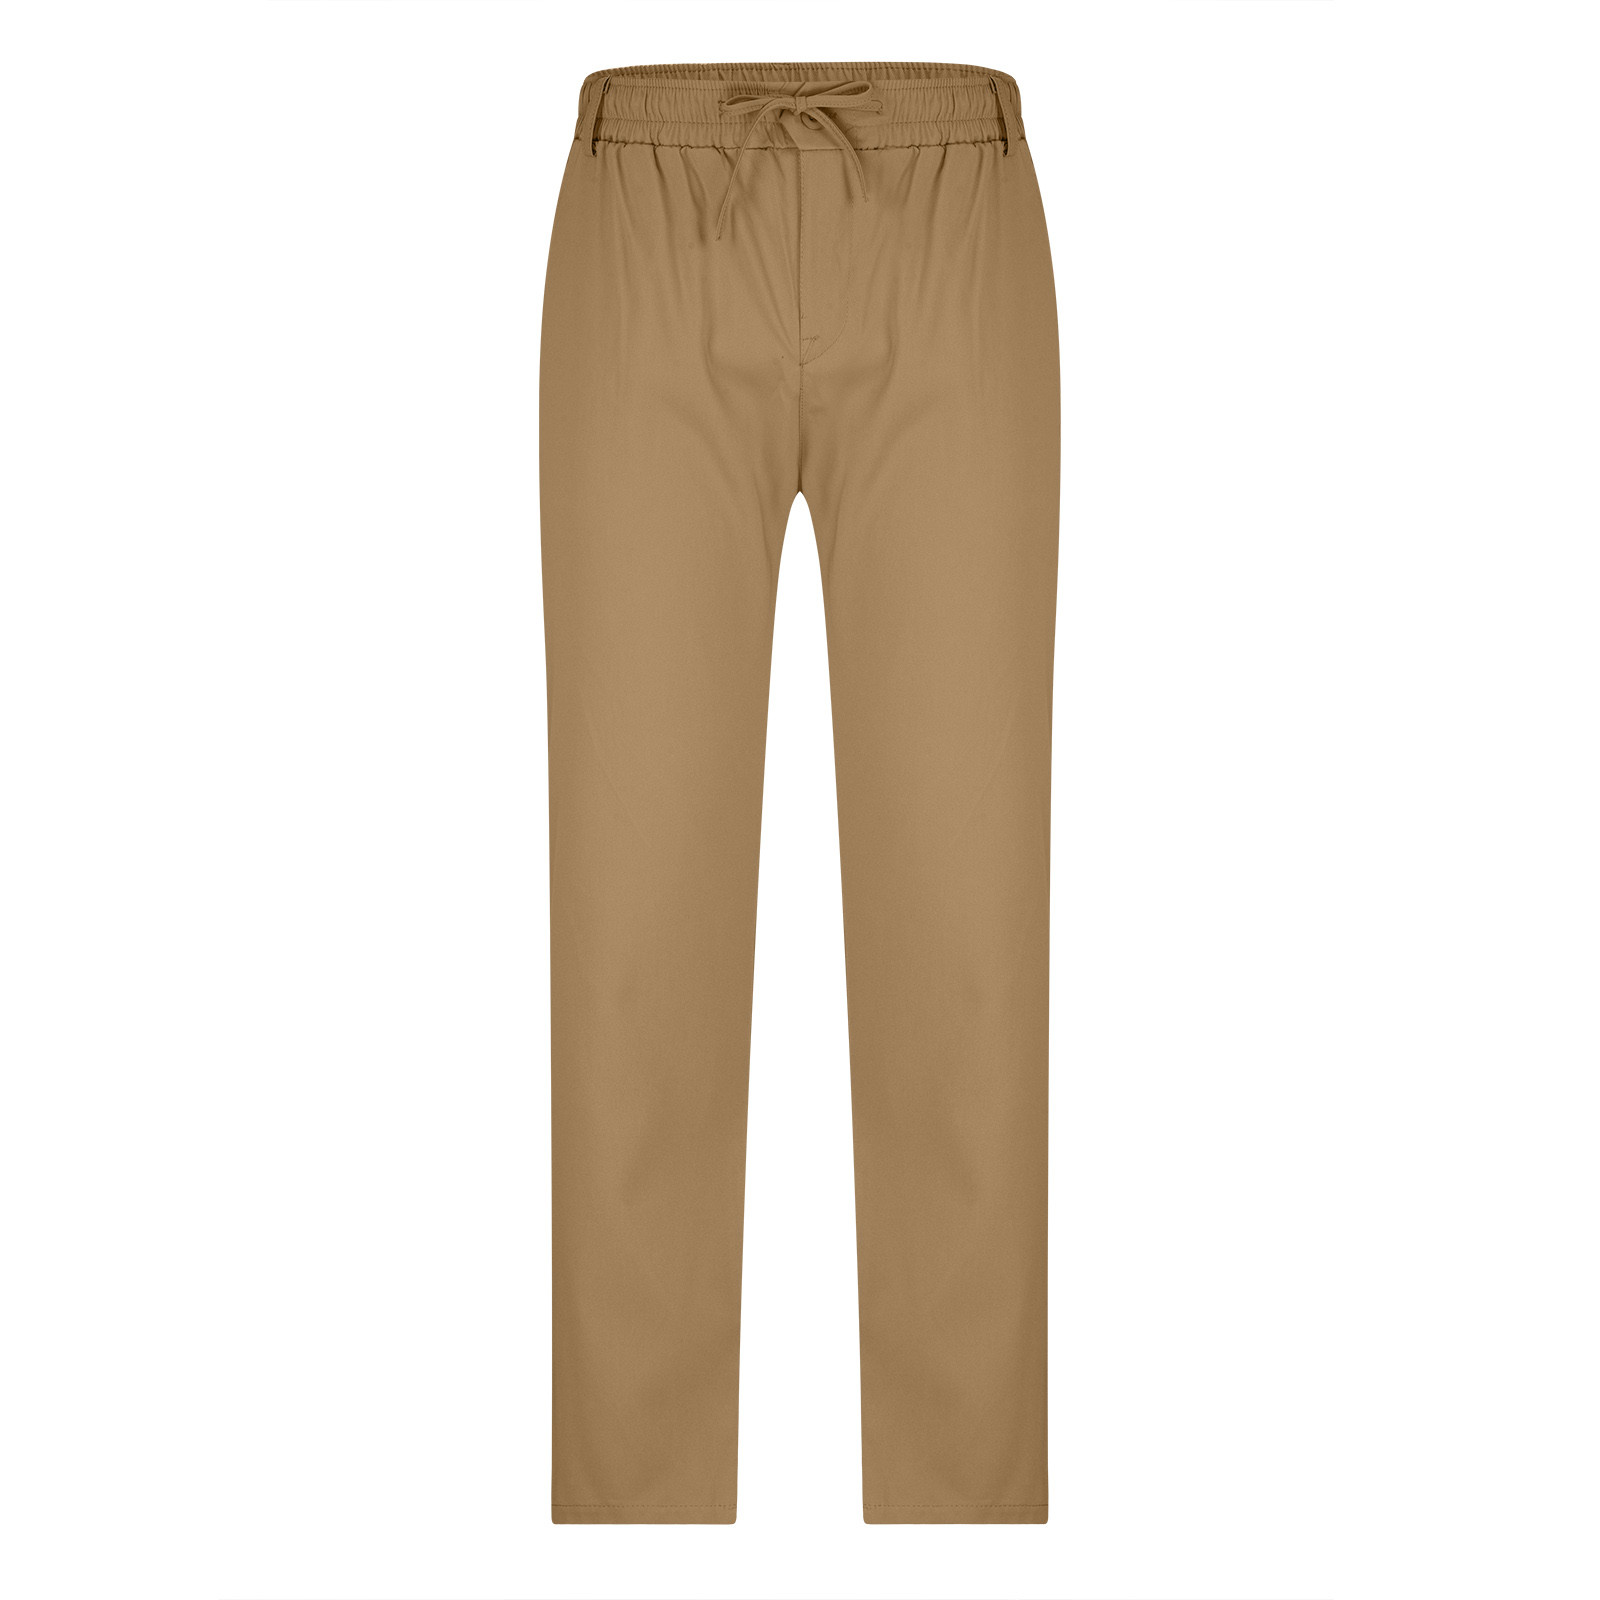 Tdoqot Chinos Pants Men- Drawstring Comftable Elastic Waist Slim Casual Cotton Mens Pants Khaki - image 5 of 6